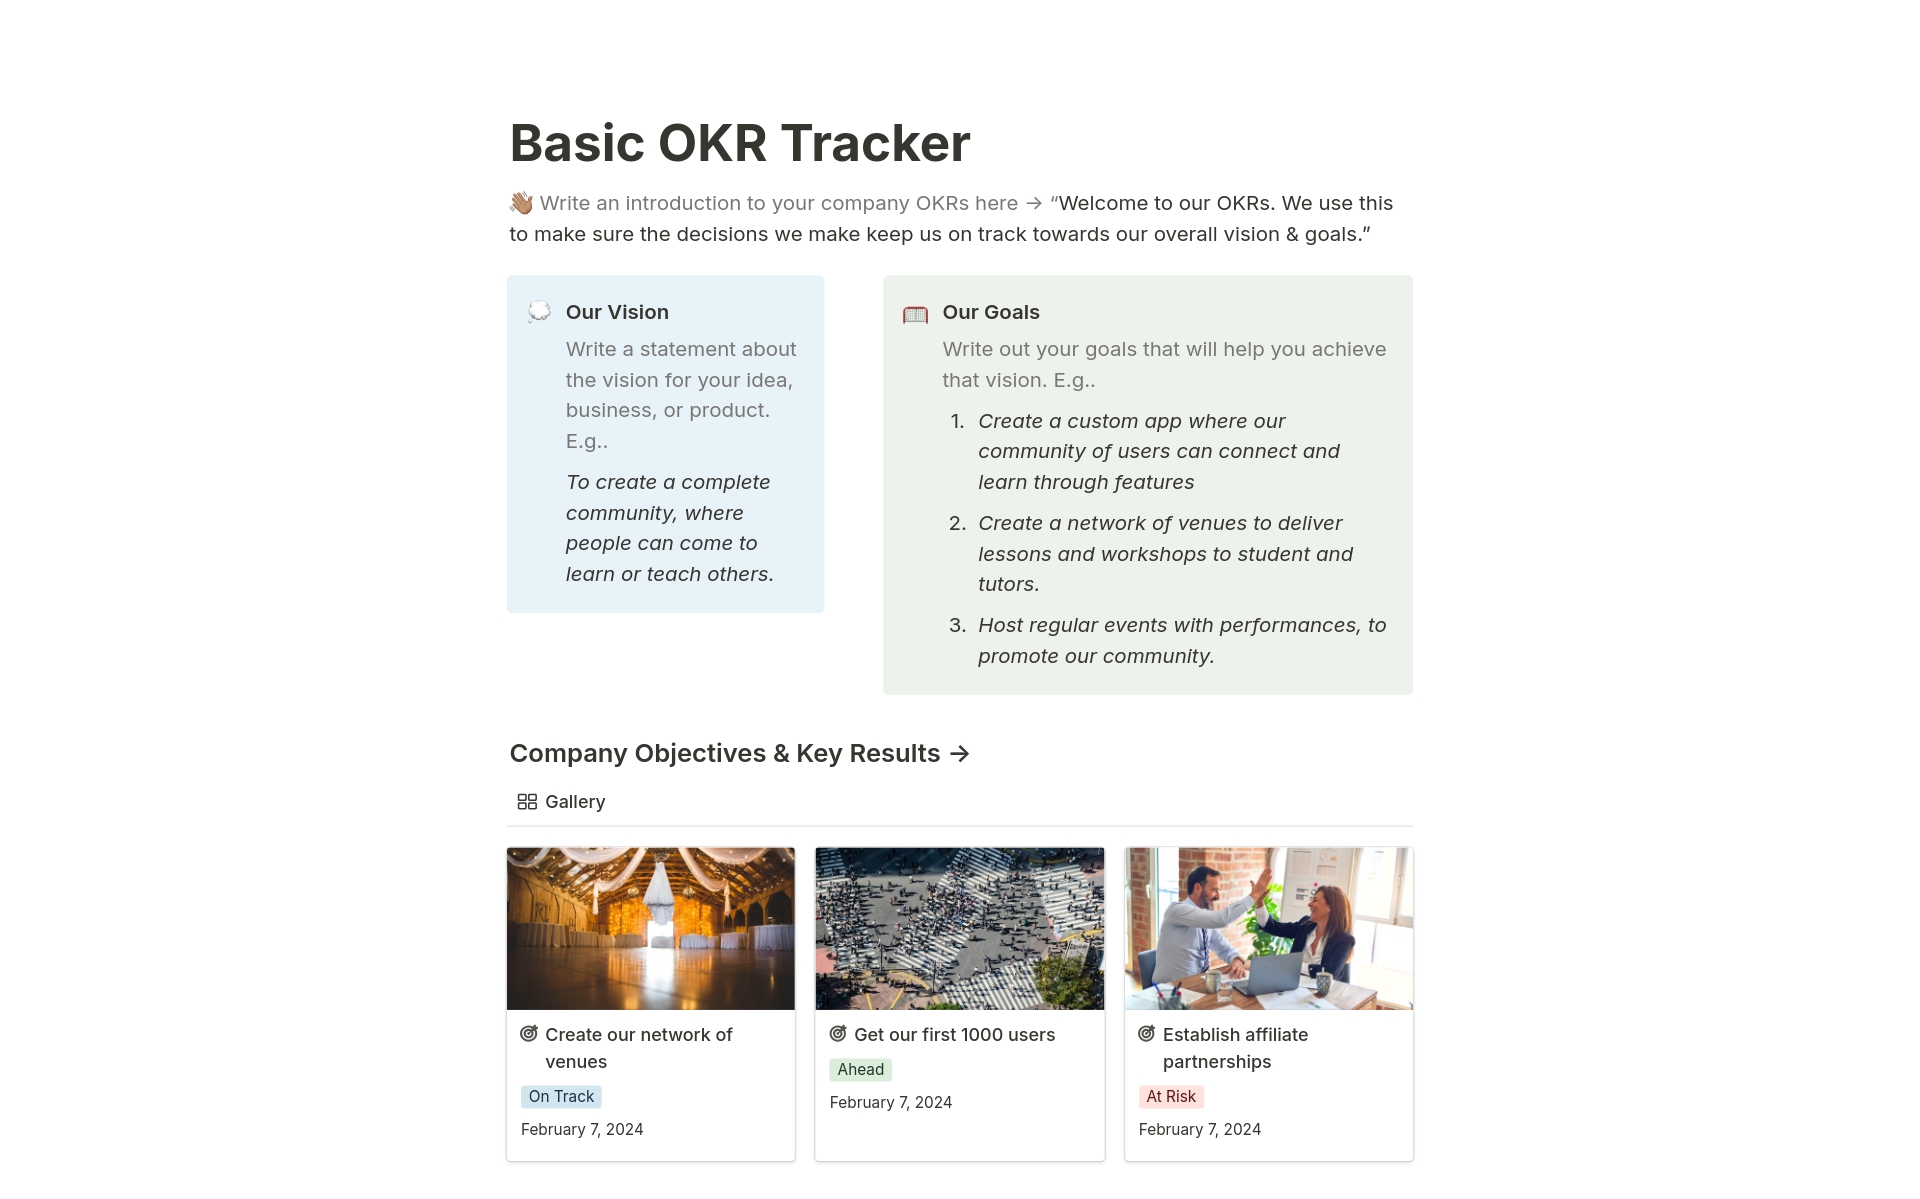 Aperçu du modèle de Basic OKR Tracker